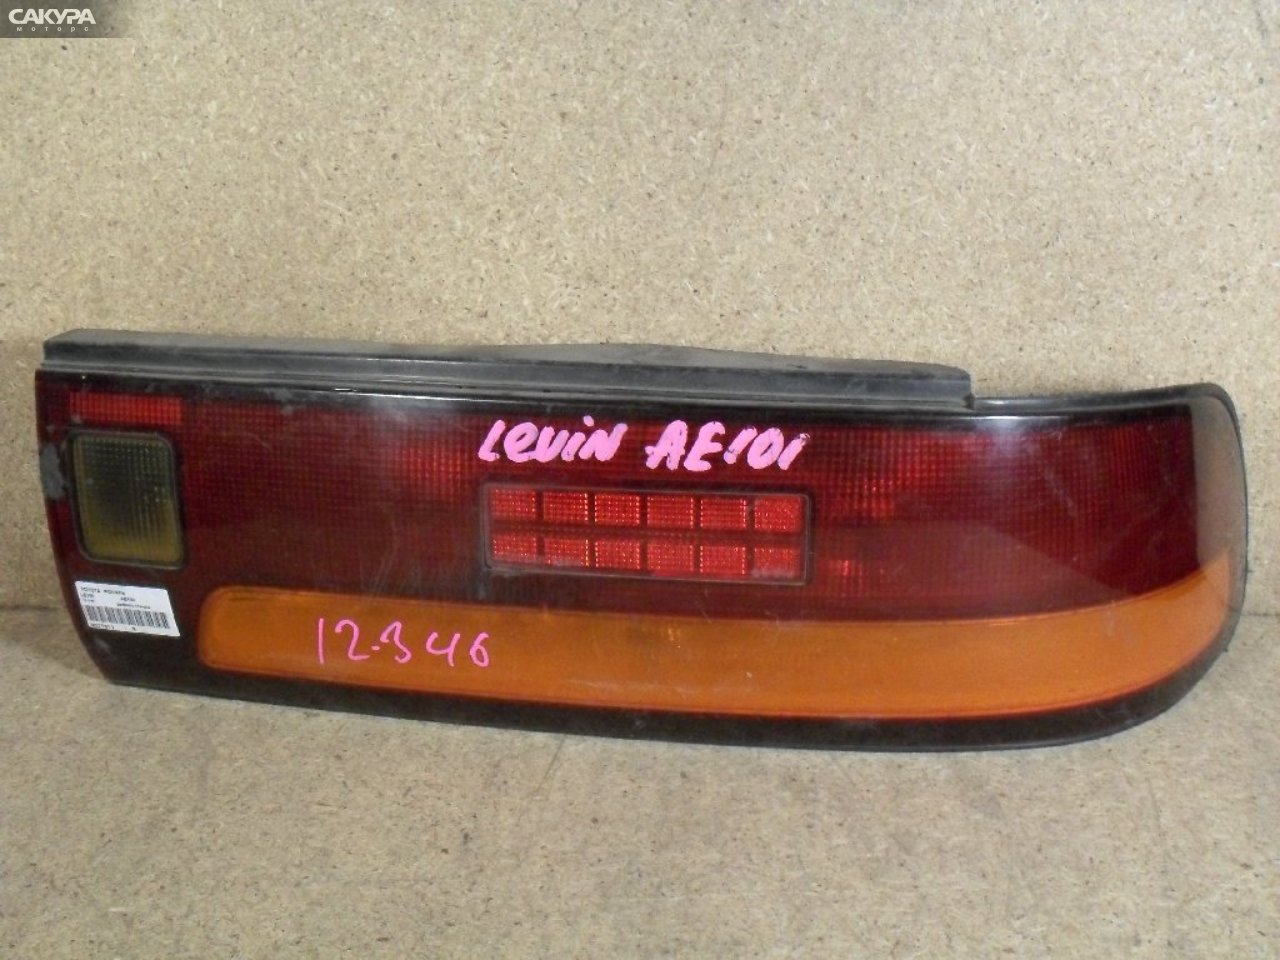 Фонарь стоп-сигнала правый Toyota Corolla Levin AE100 12-346: купить в Сакура Абакан.